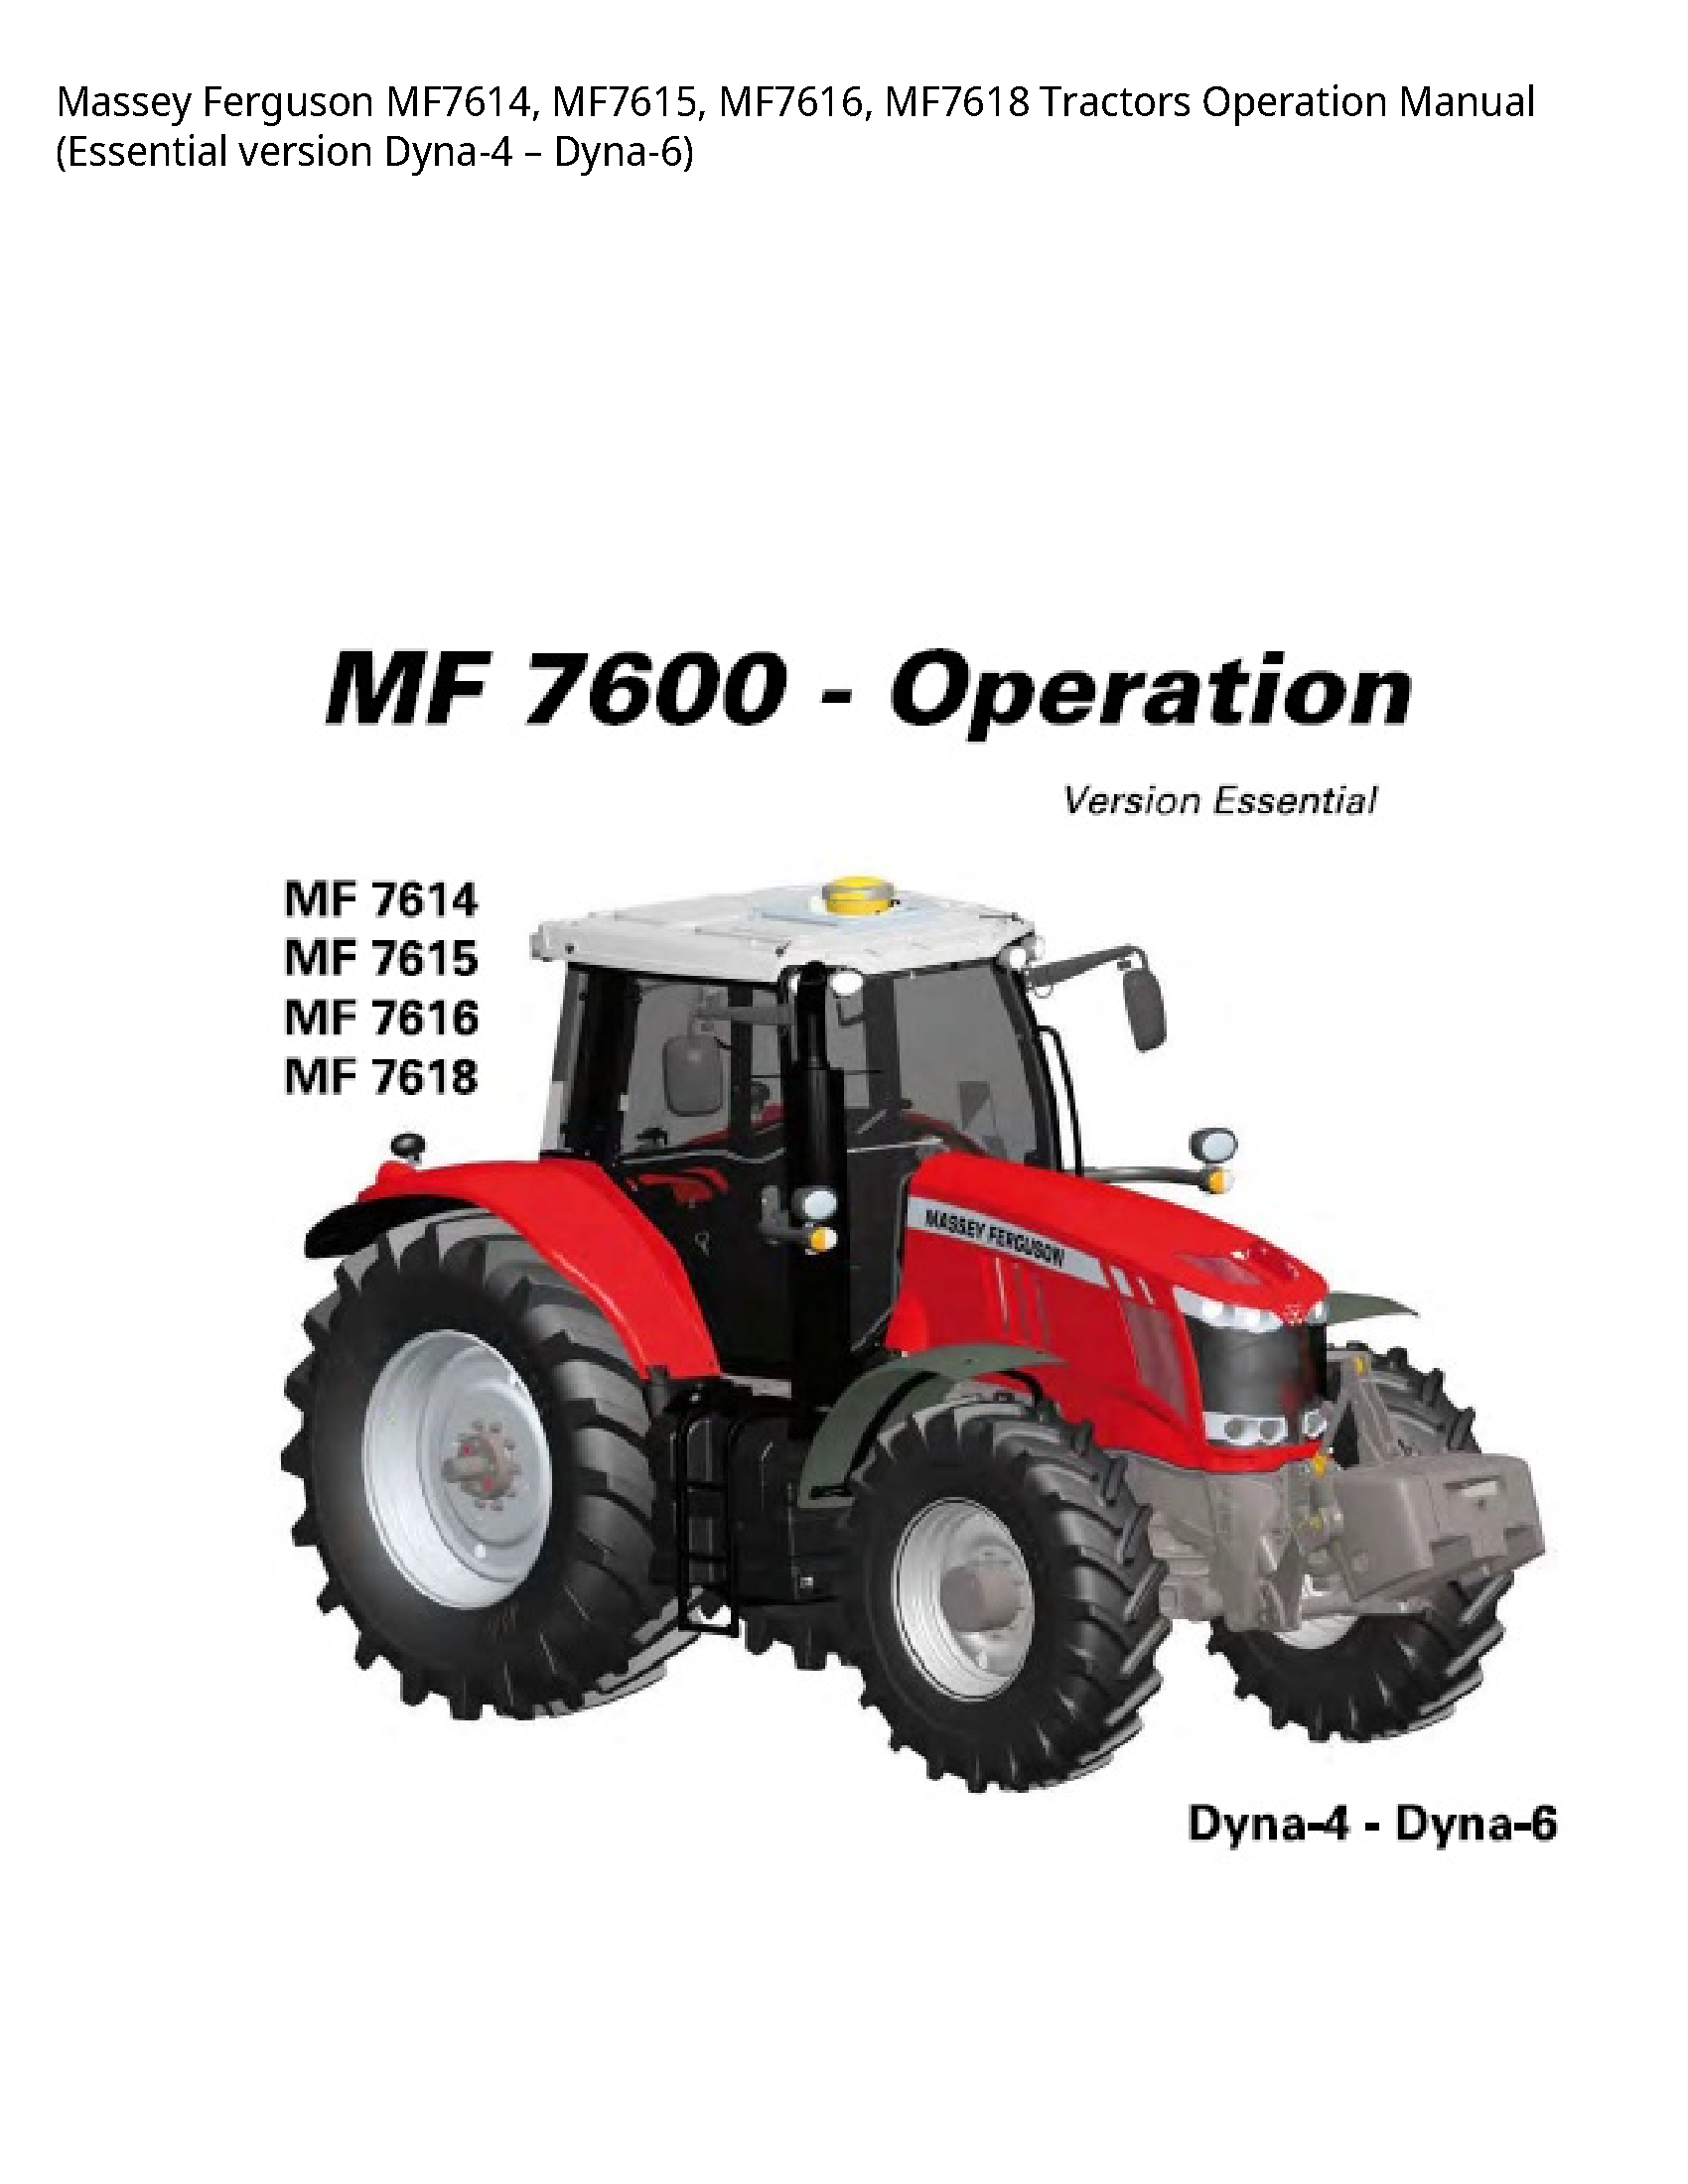 Massey Ferguson MF7614 Tractors Operation manual